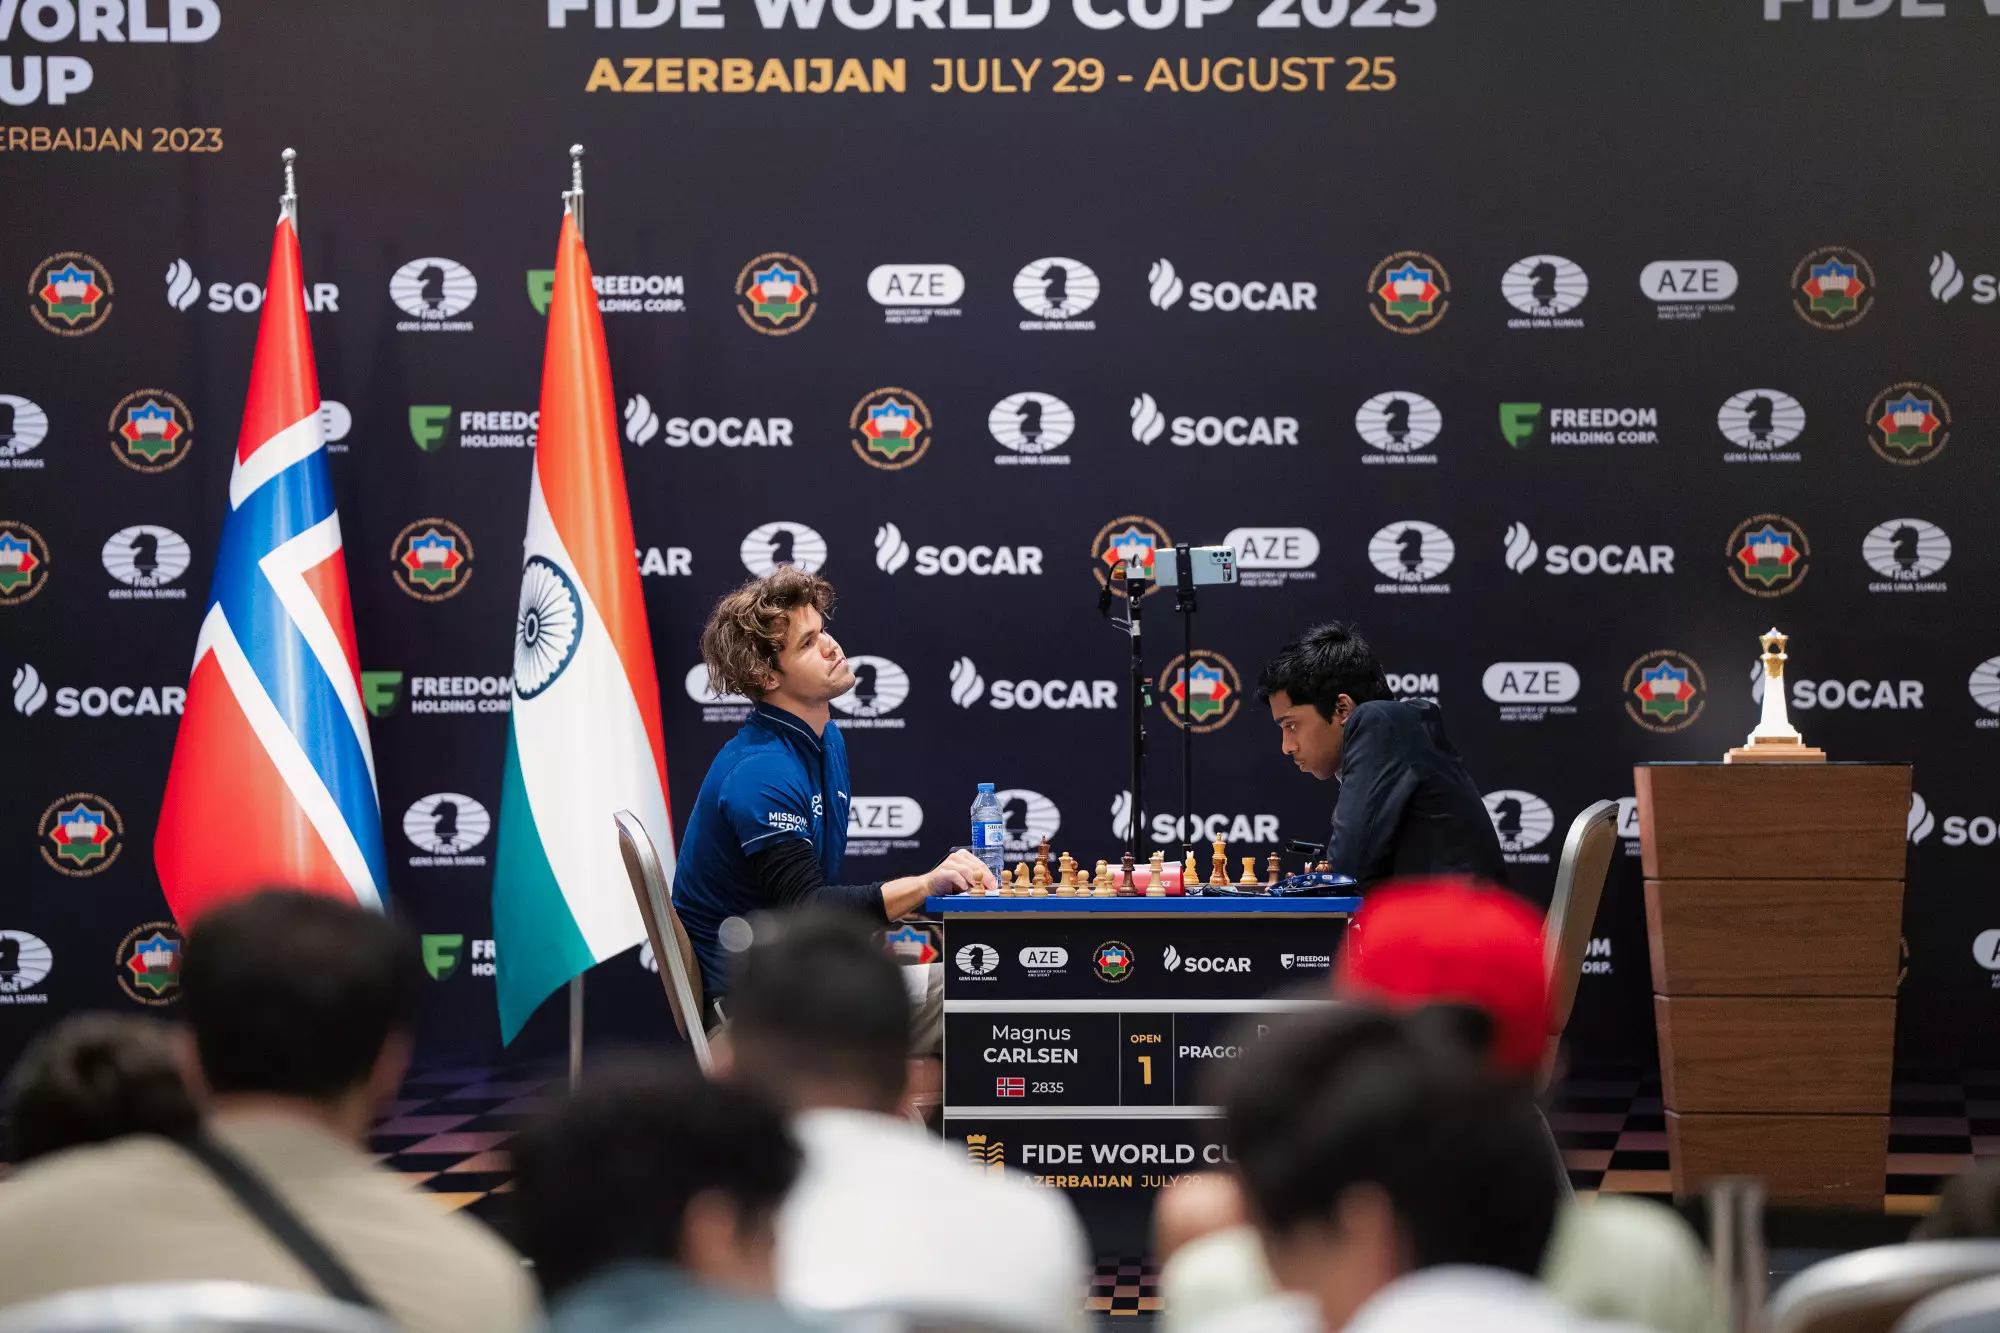 R Praggnanandhaa vs Magnus Carlsen in Game 2 of the FIDE World Cup fina